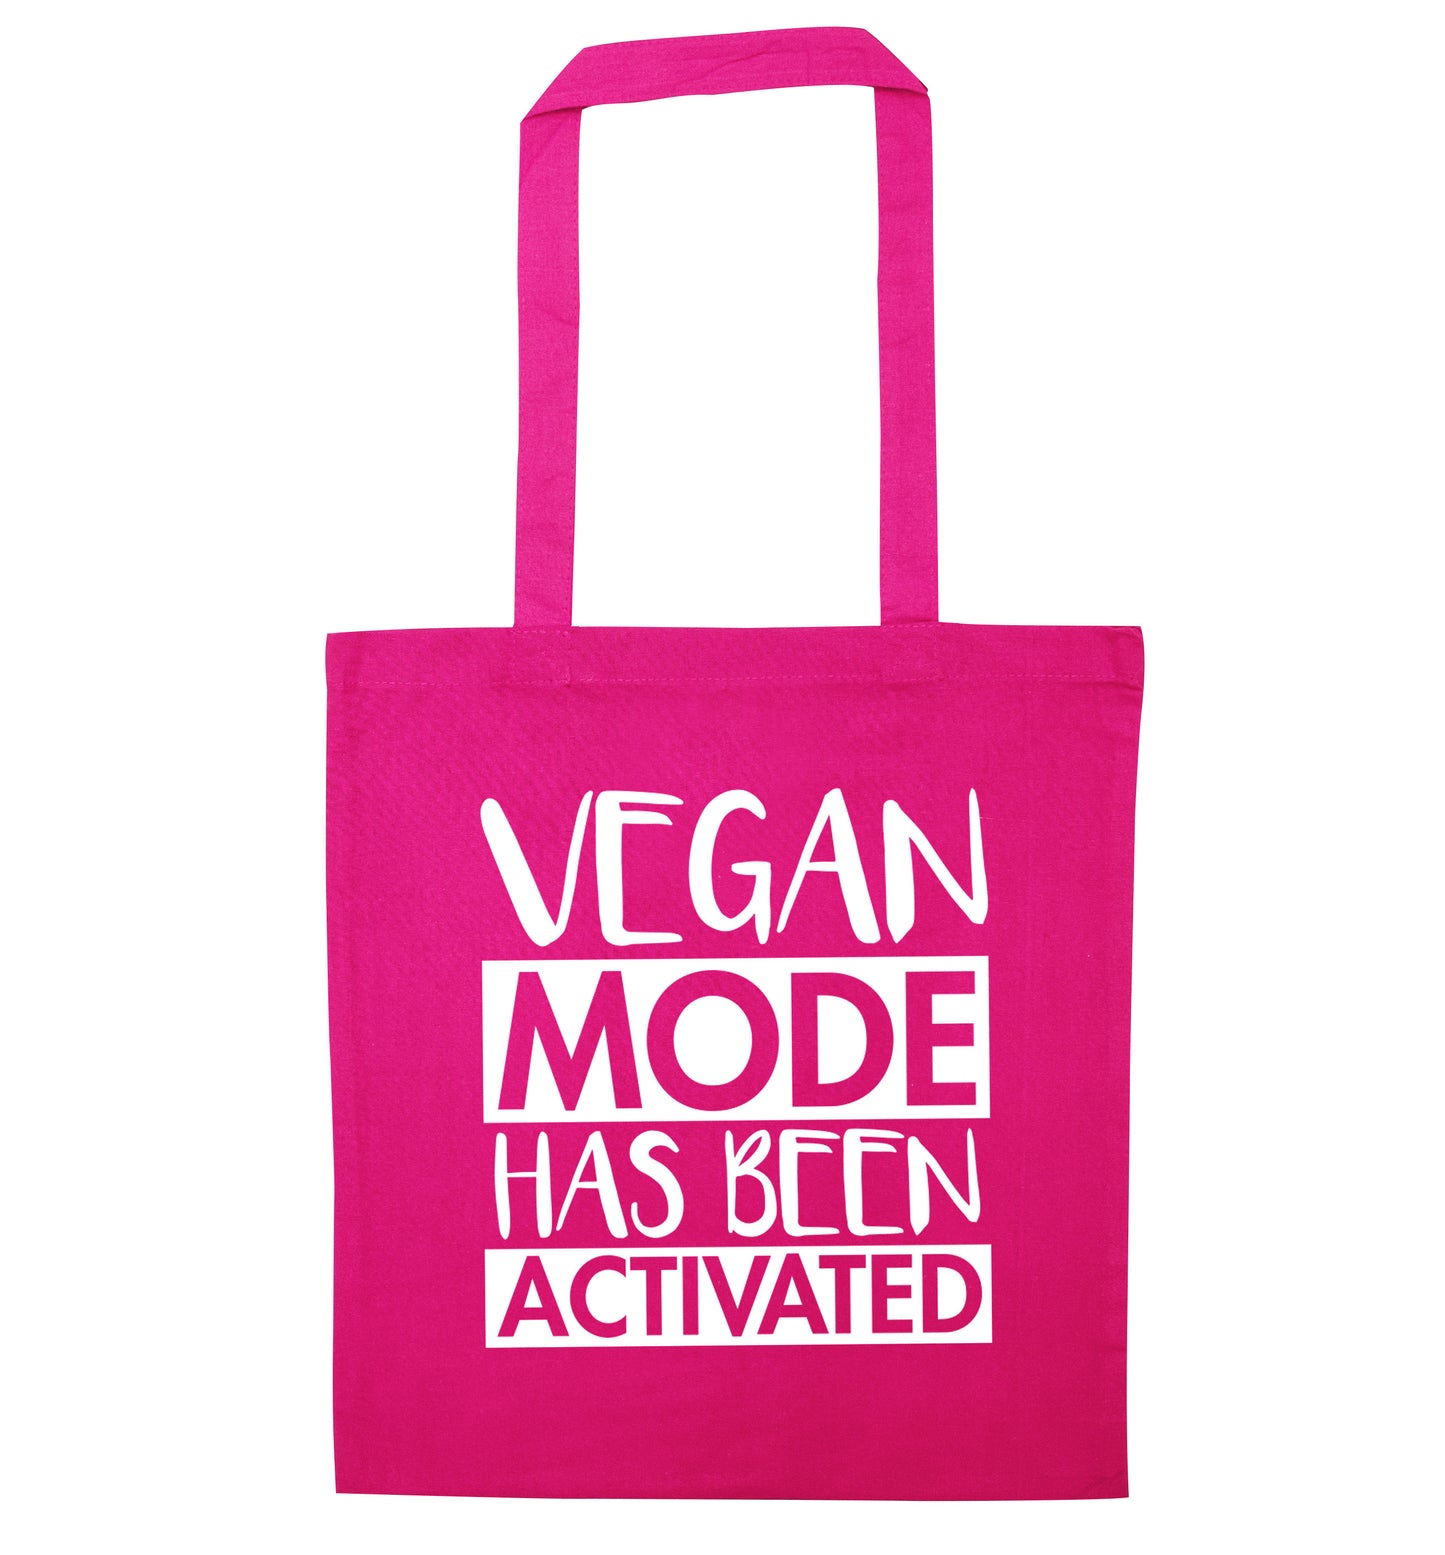 Vegan mode activated pink tote bag